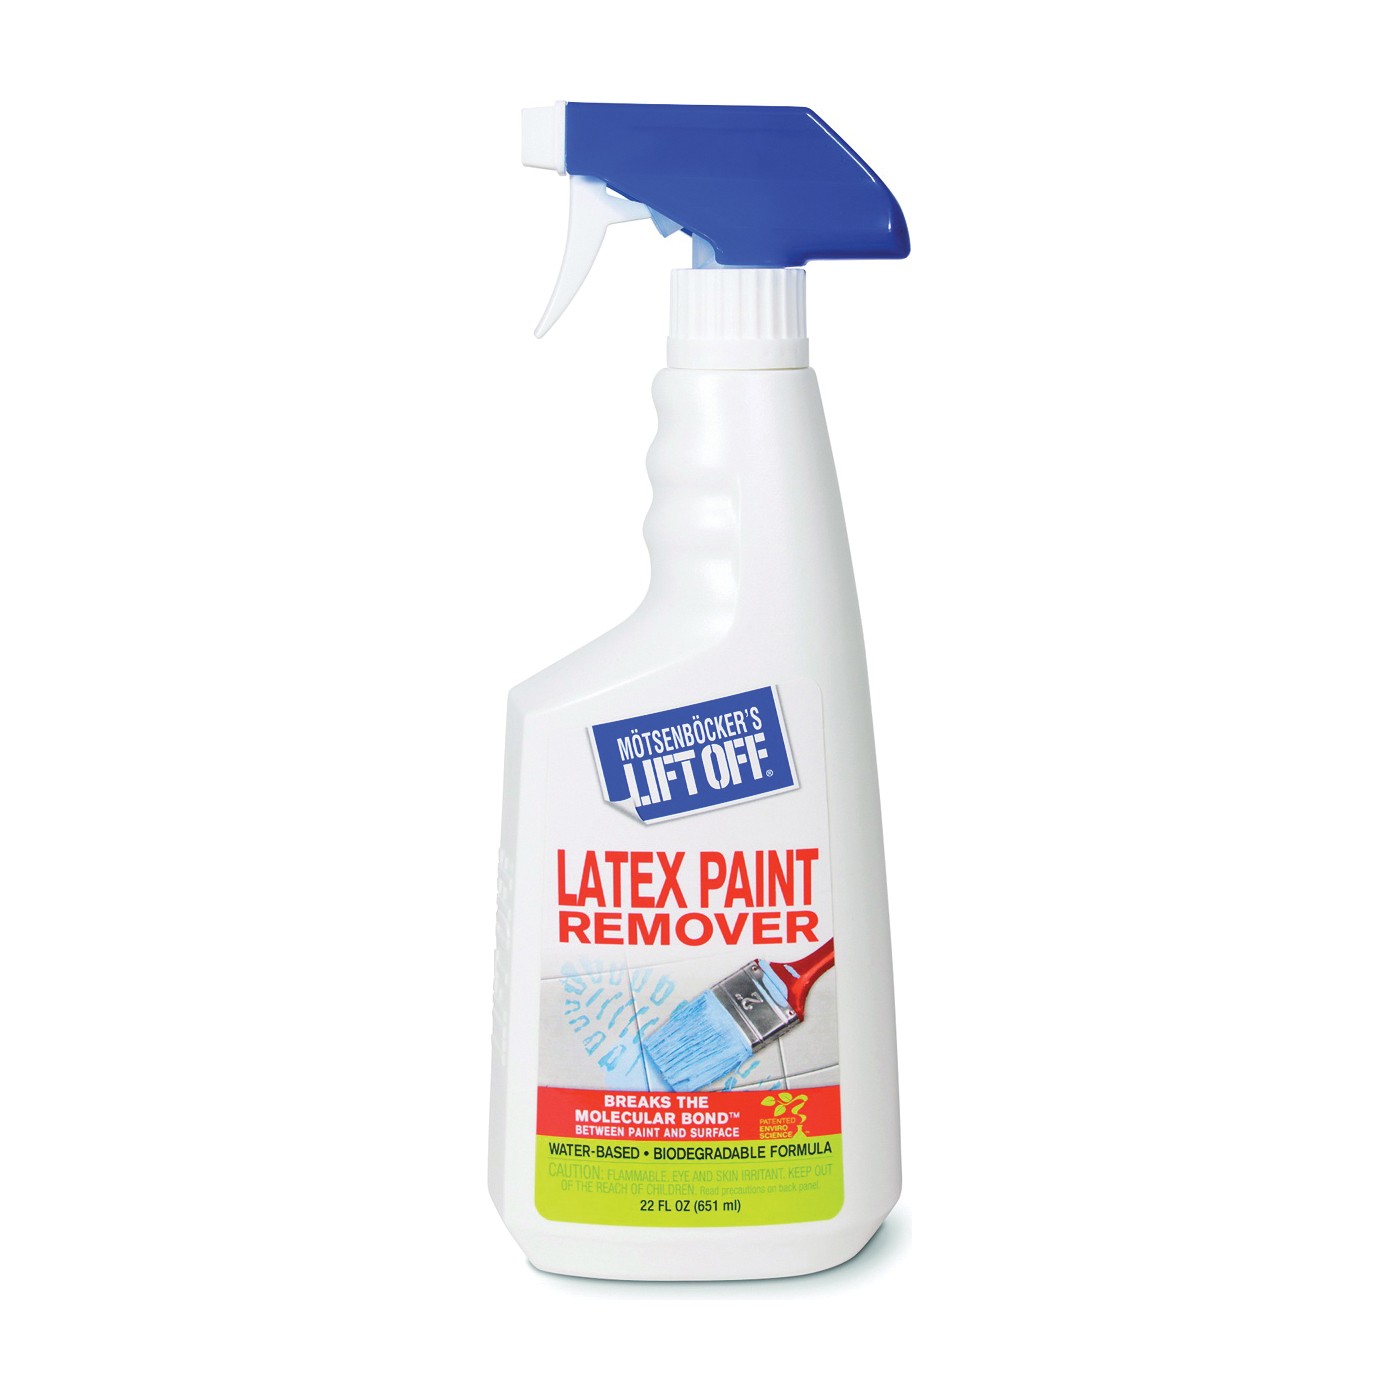 Motsenbocker's Lift Off 413-01 Latex Paint Remover, Liquid, Mild, Clear, 22 oz, Bottle